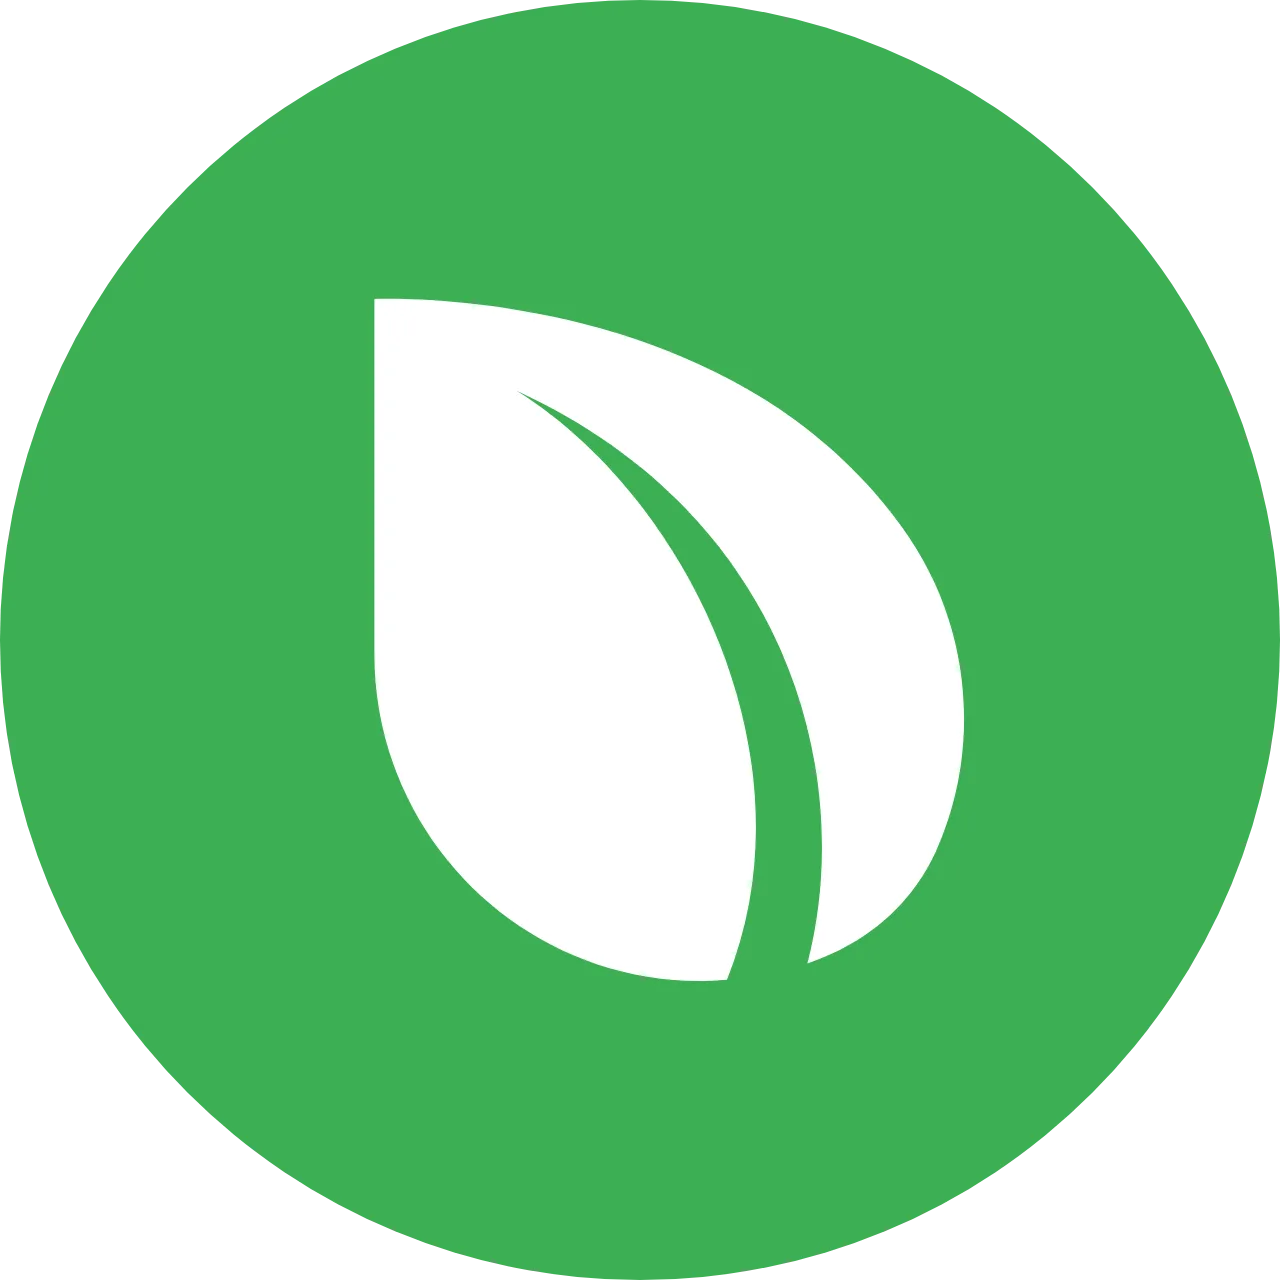 Peercoin logo in svg format